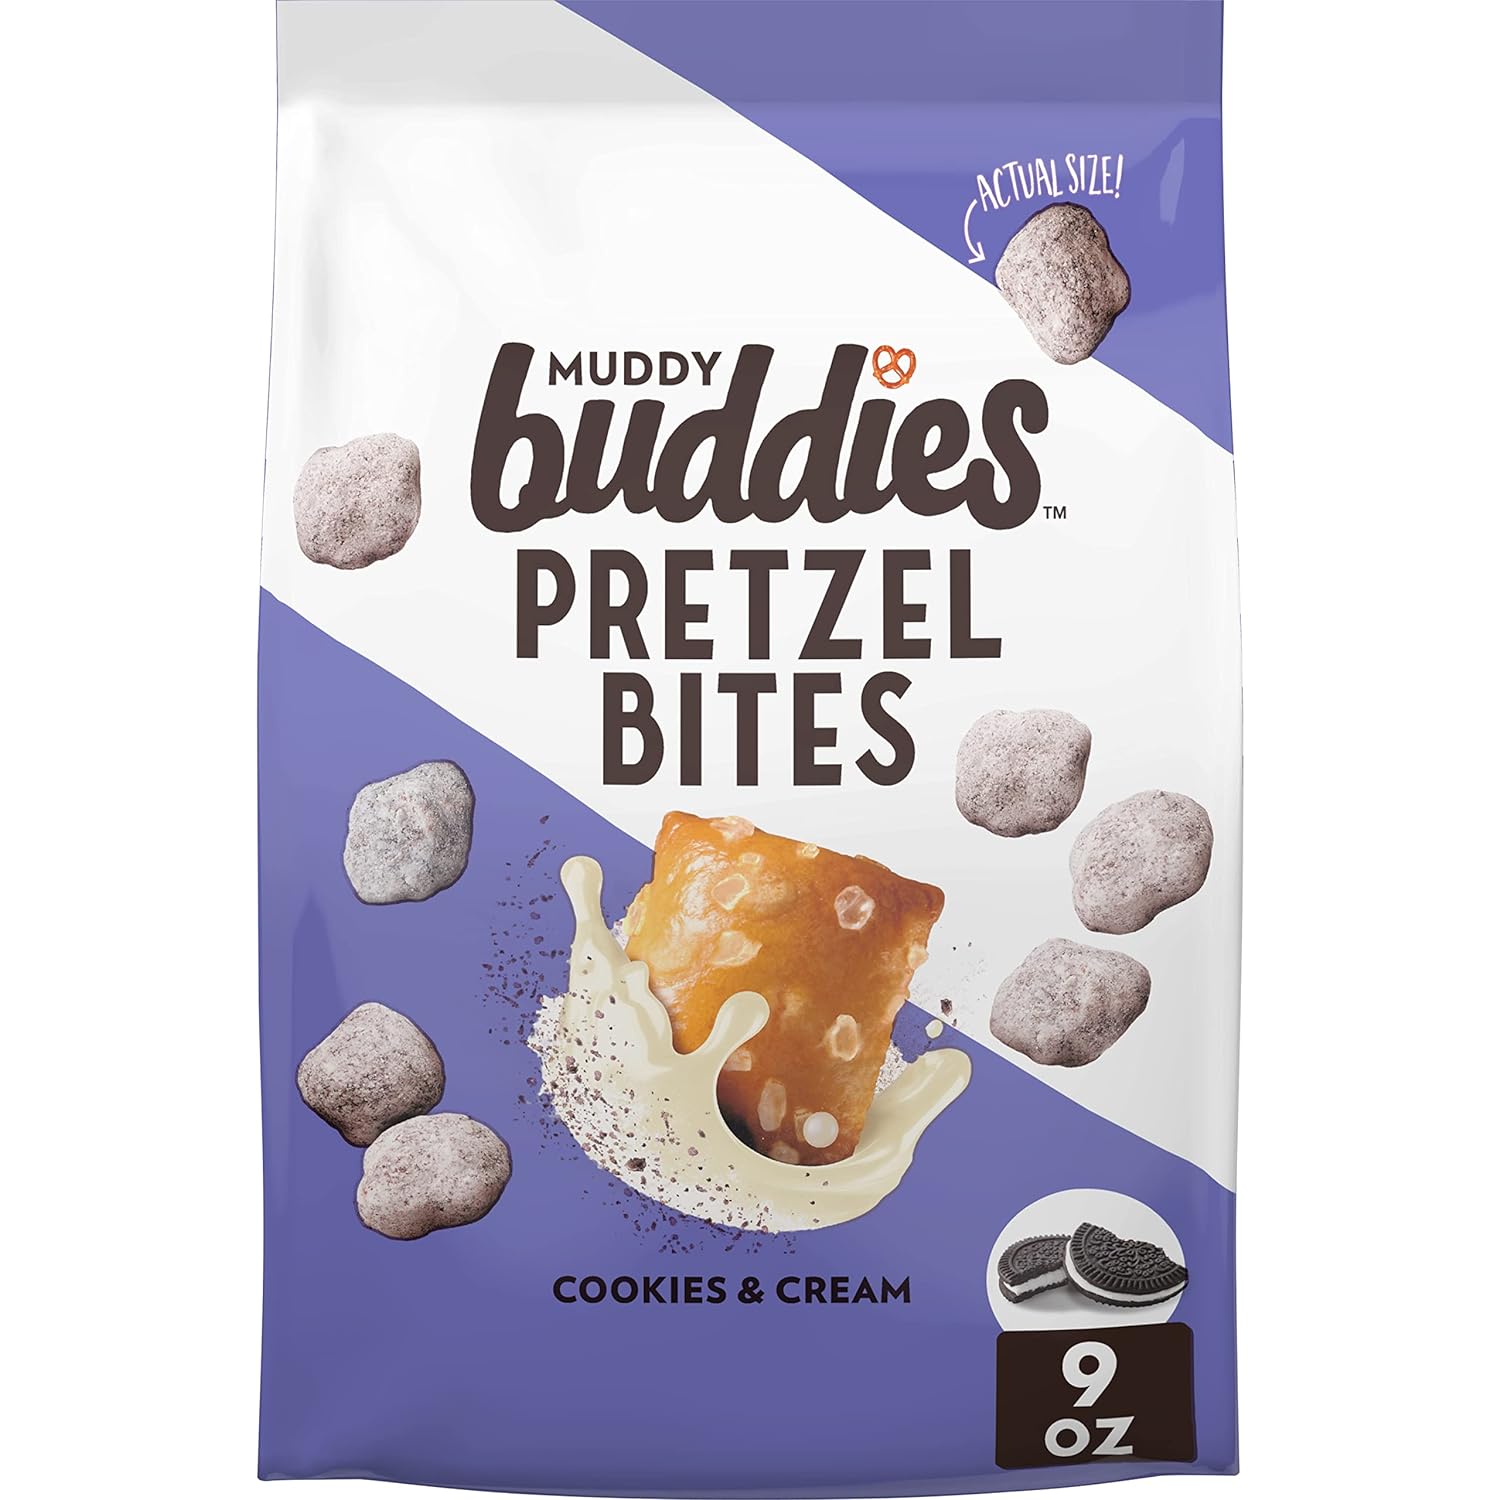 Chex Mix Muddy Buddies Pretzel Bites, Cookies and Cream, Snack Bag, 9 oz